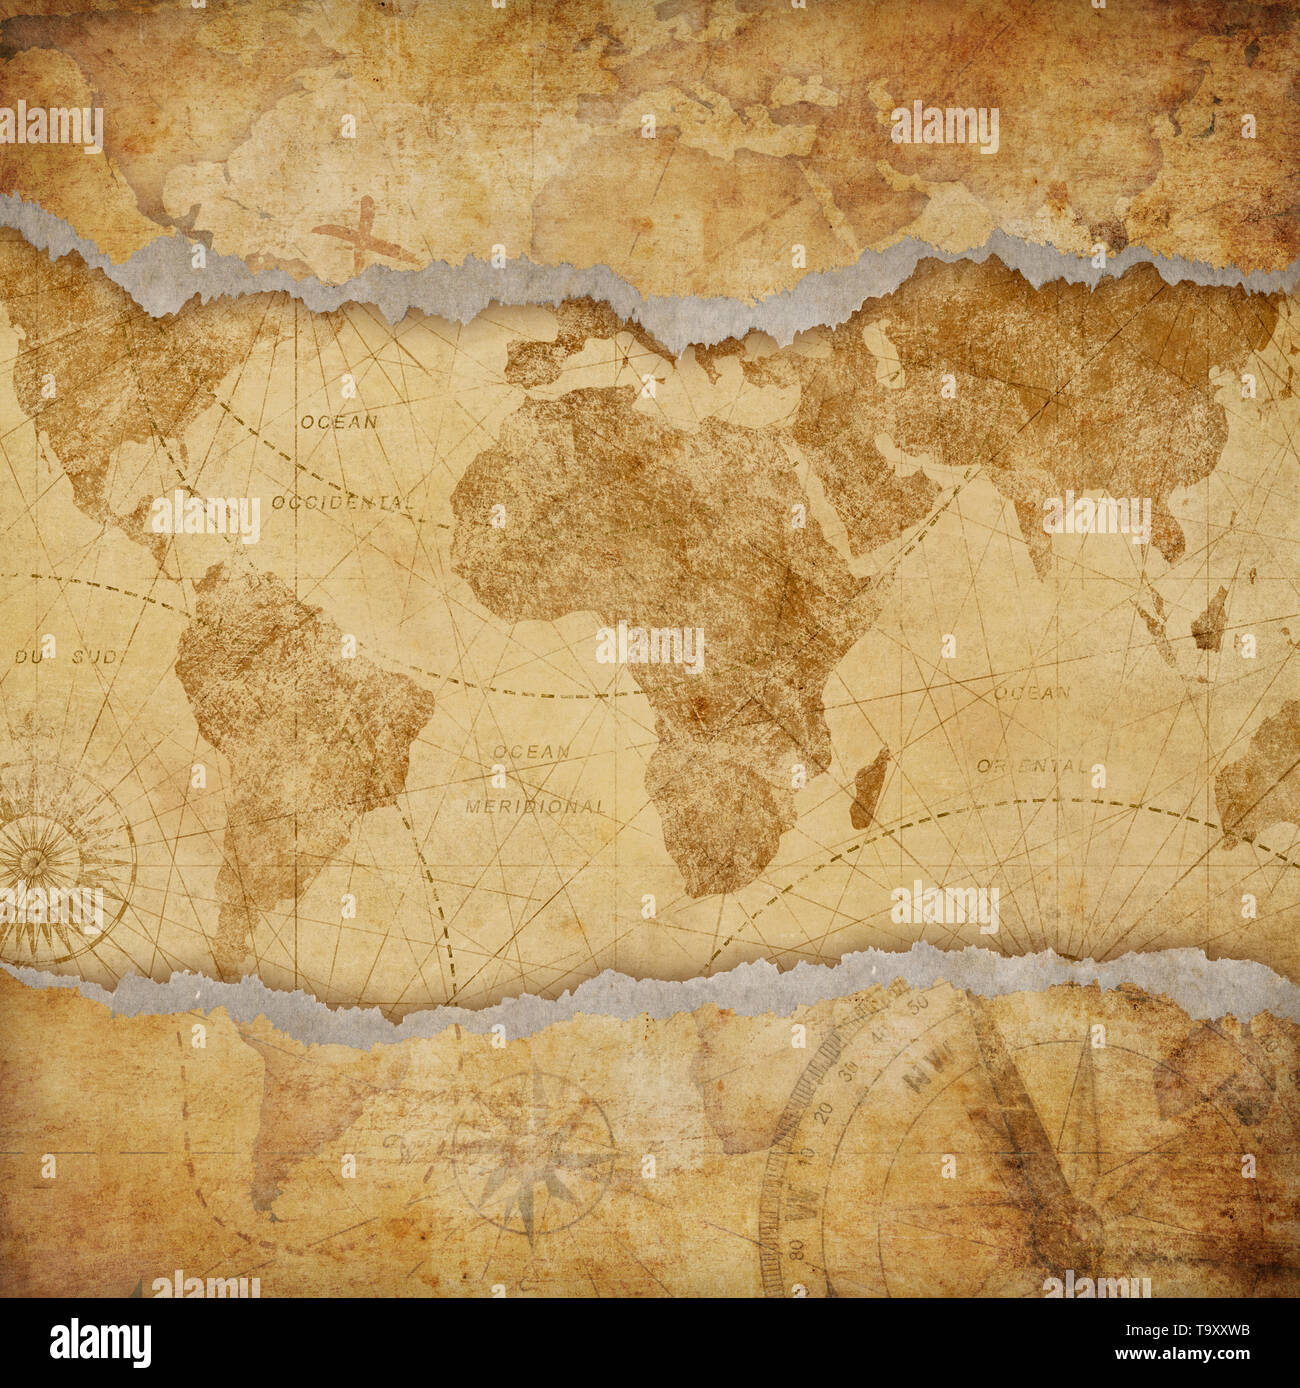 Vintage torn worn world map illustration Stock Photo